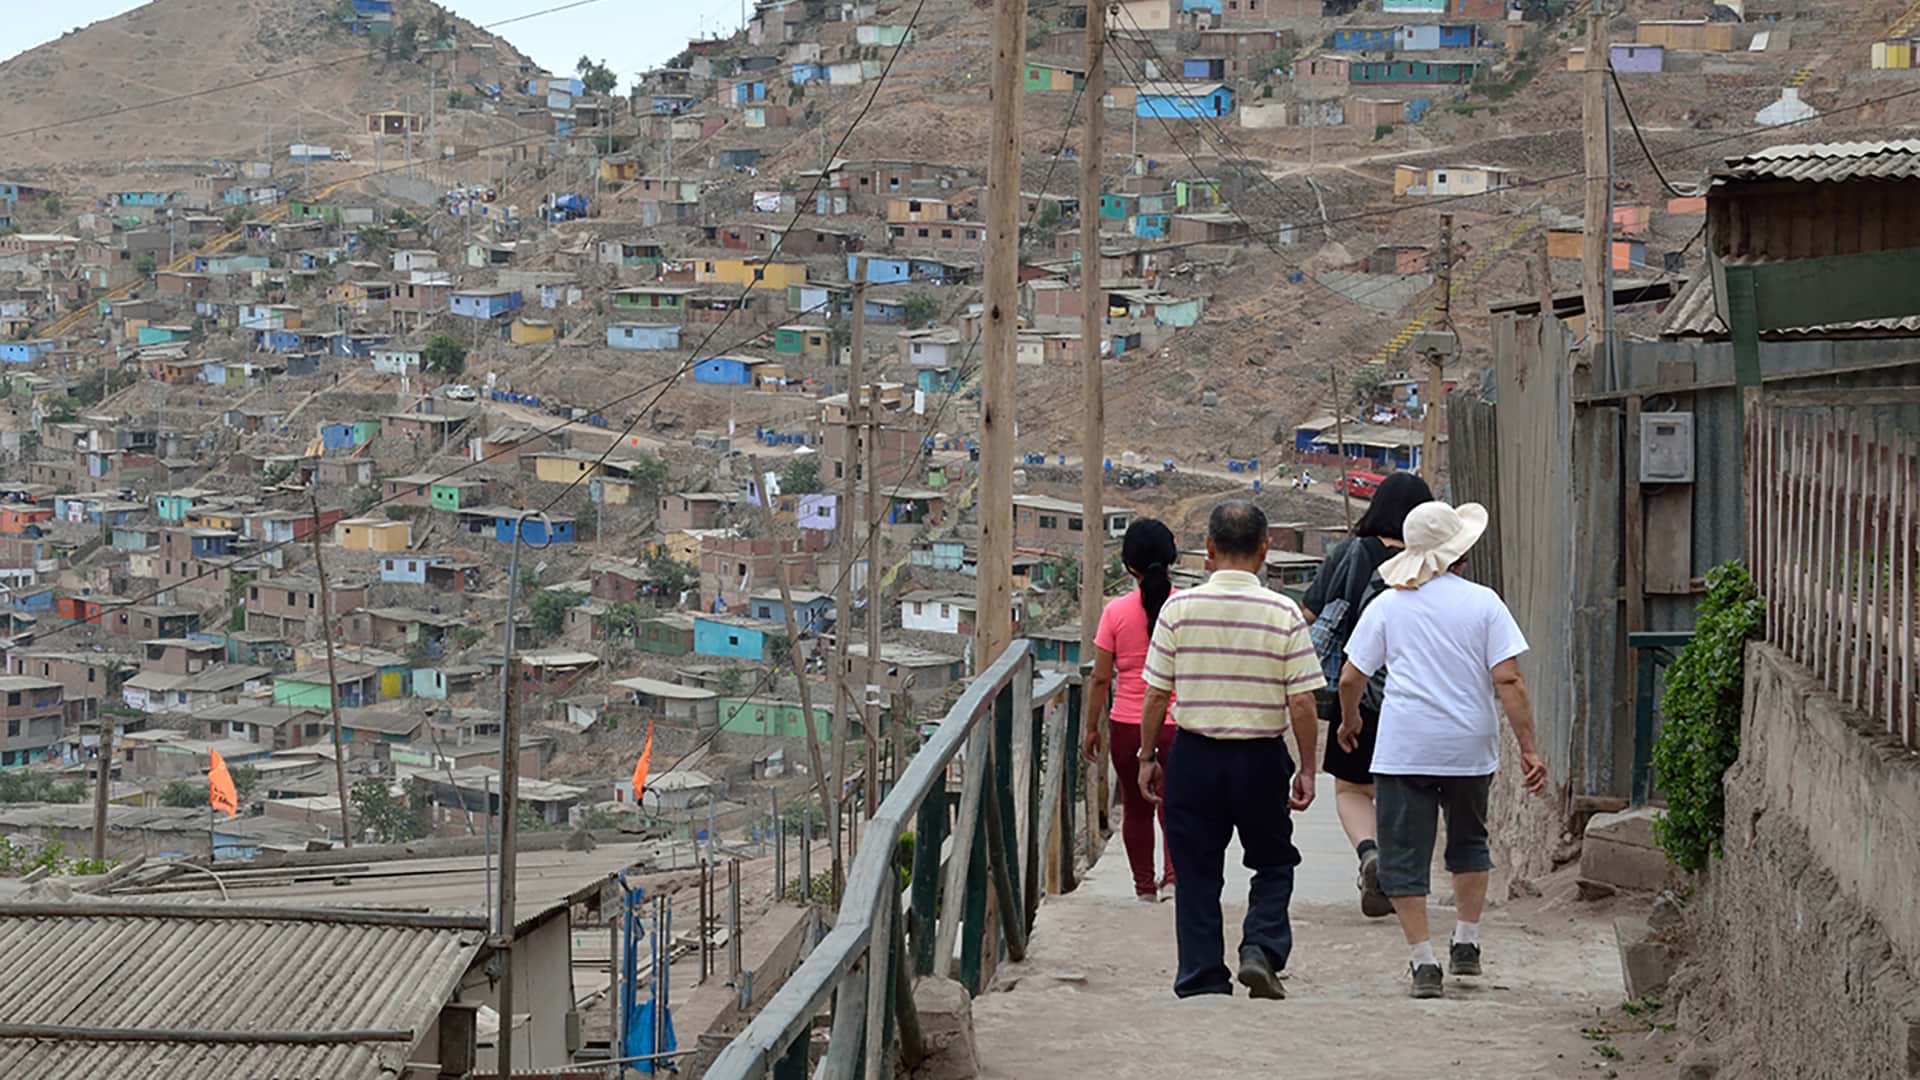 11People walking through a typical suburban neighborhood of the city | Responsible Travel Peru